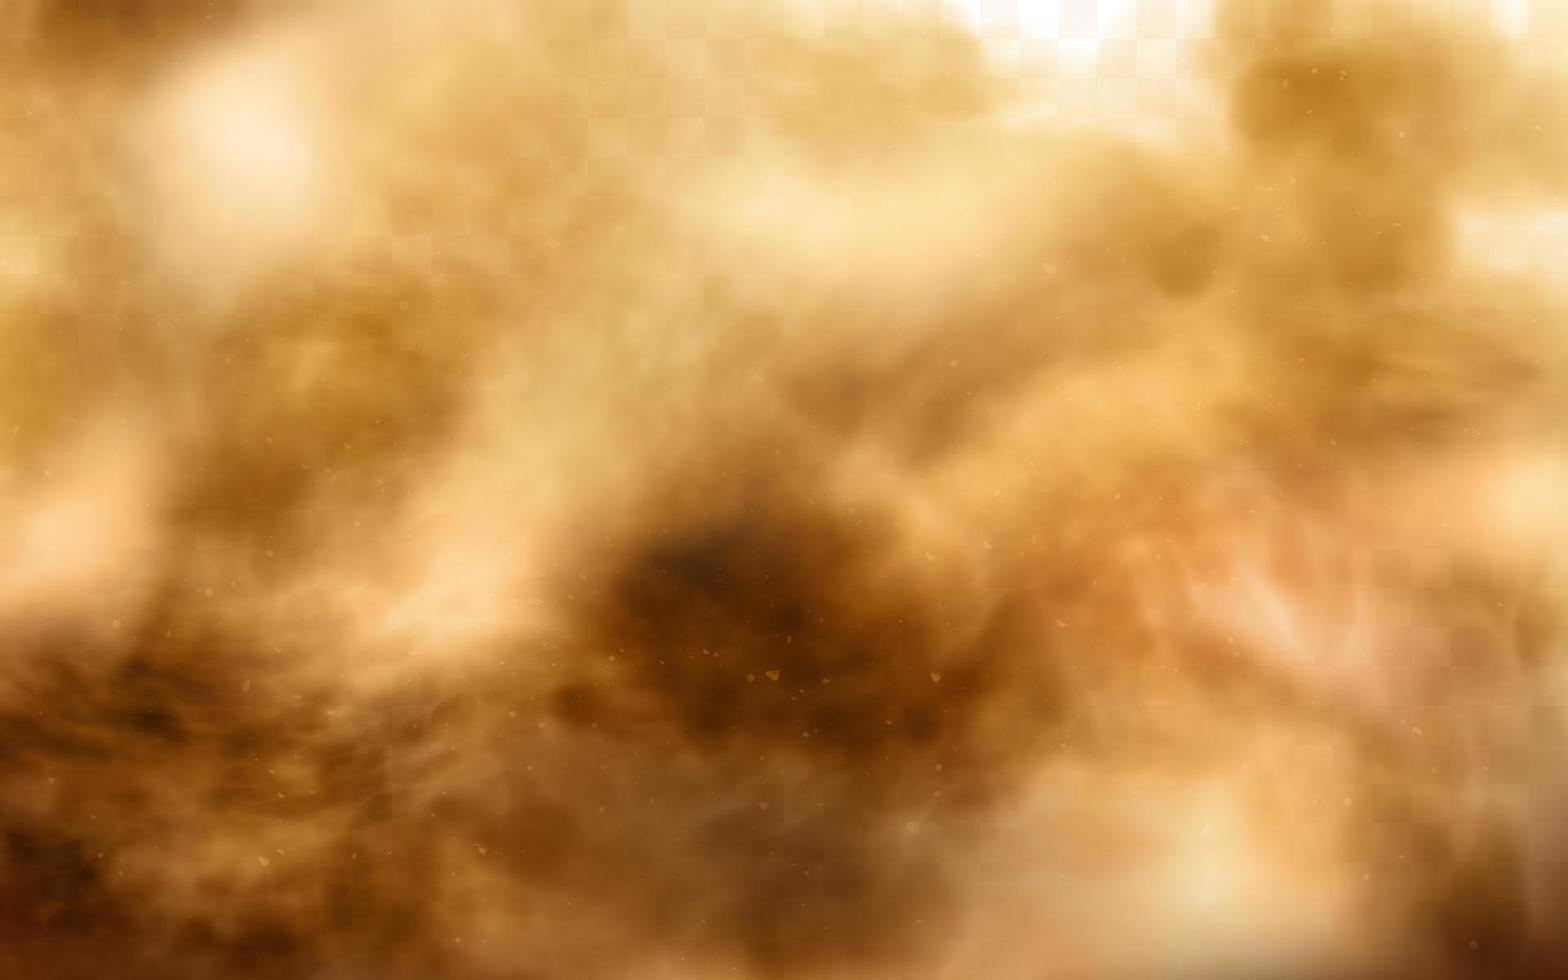 Desert sandstorm, brown dusty cloud on transparent vector